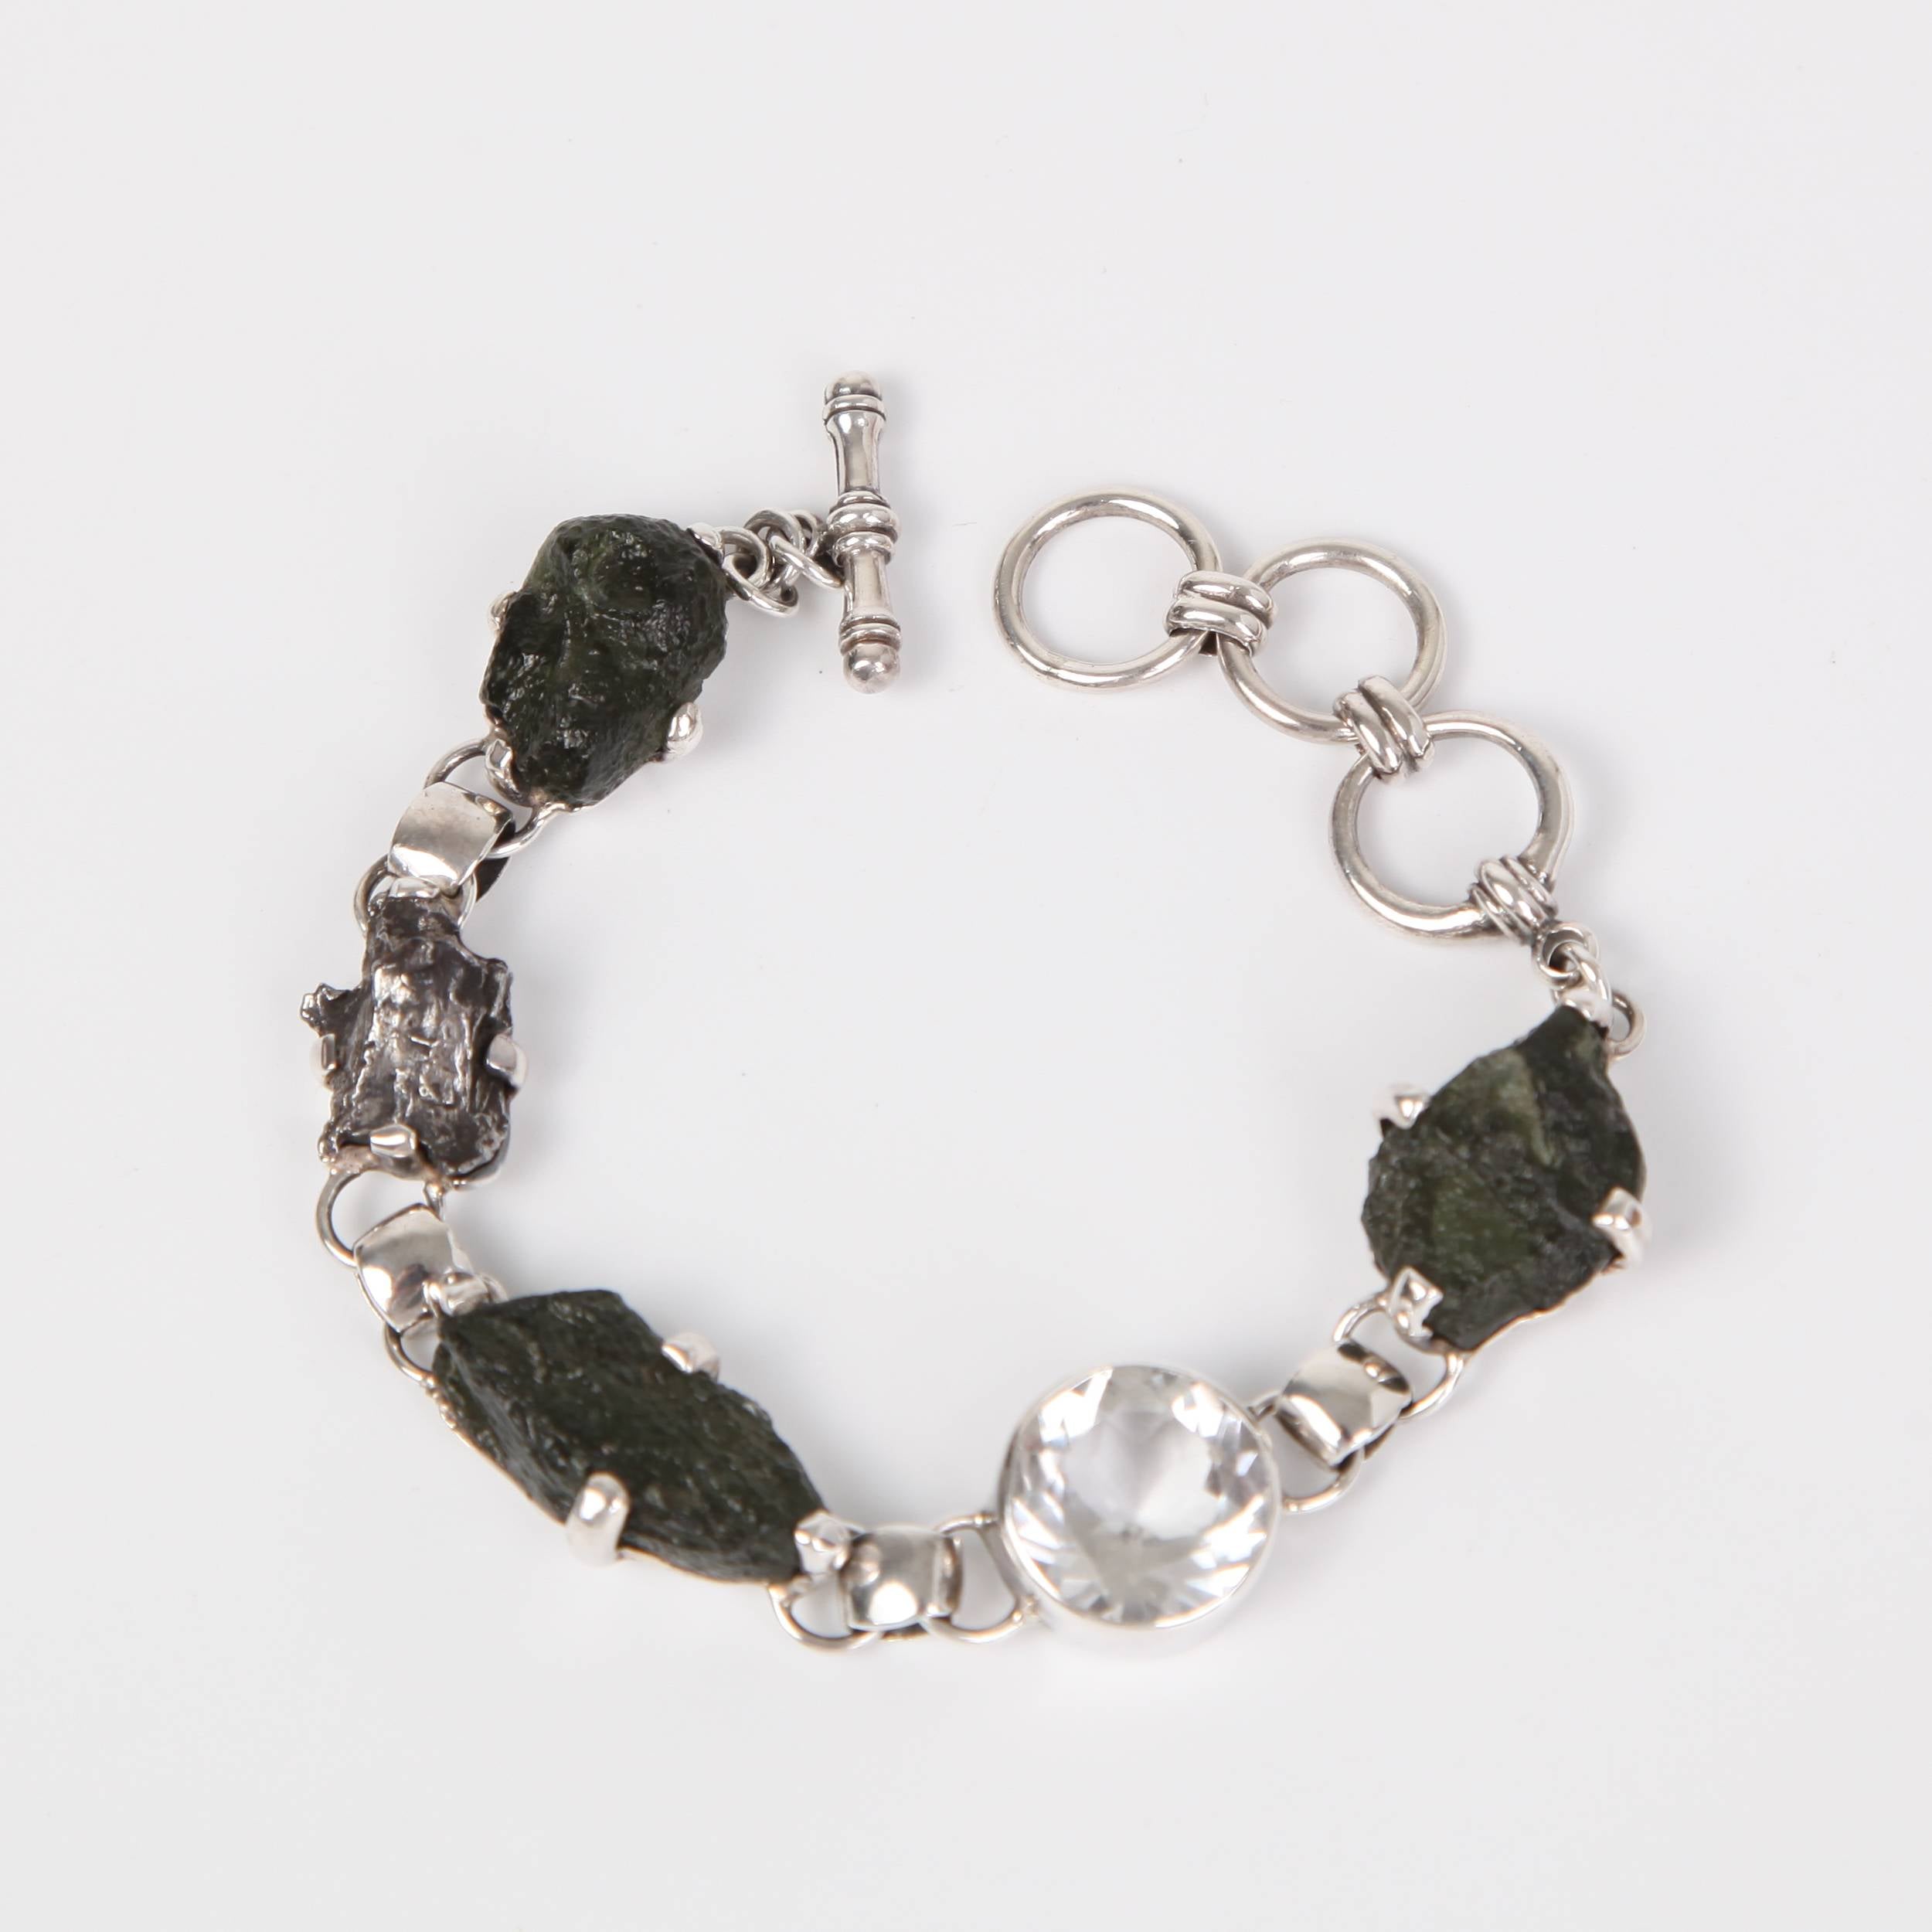 Rough Moldavite (meteorite) Sterling Silver Bracelet with Clear Quartz and Campo de Clelo Meteorite